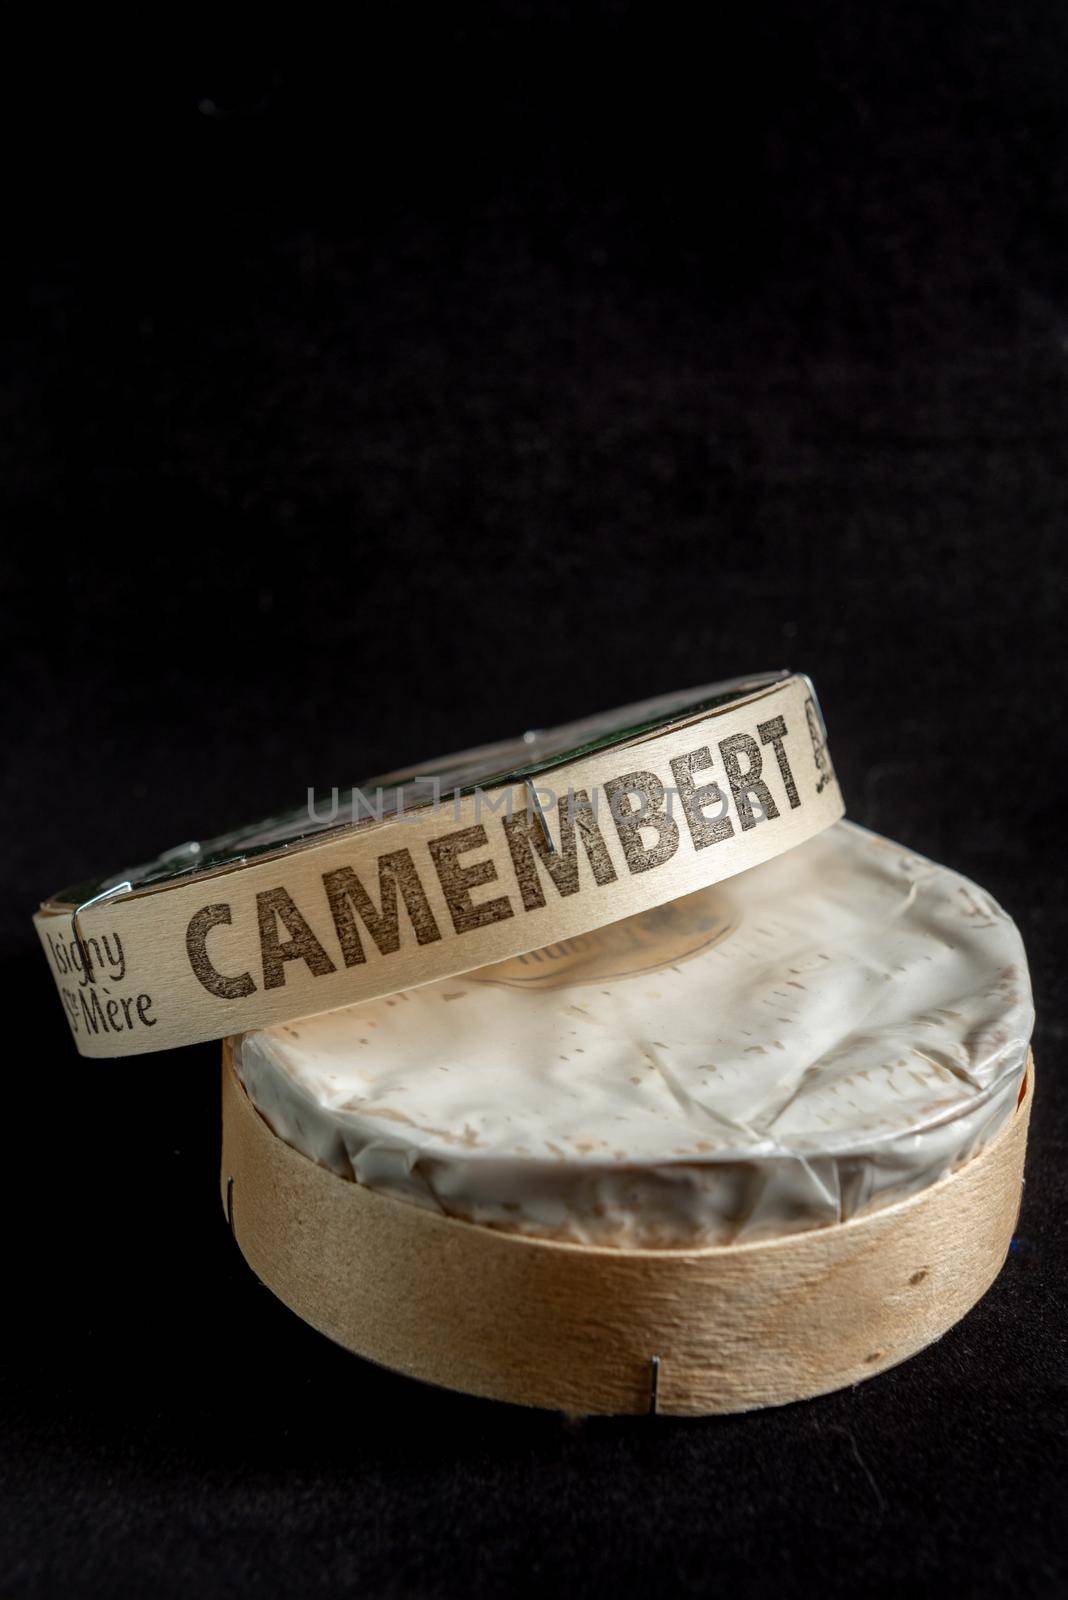 Andorra, La Vella, Andorra : 2021 April 30 : Camembert cheese in background black in studio.